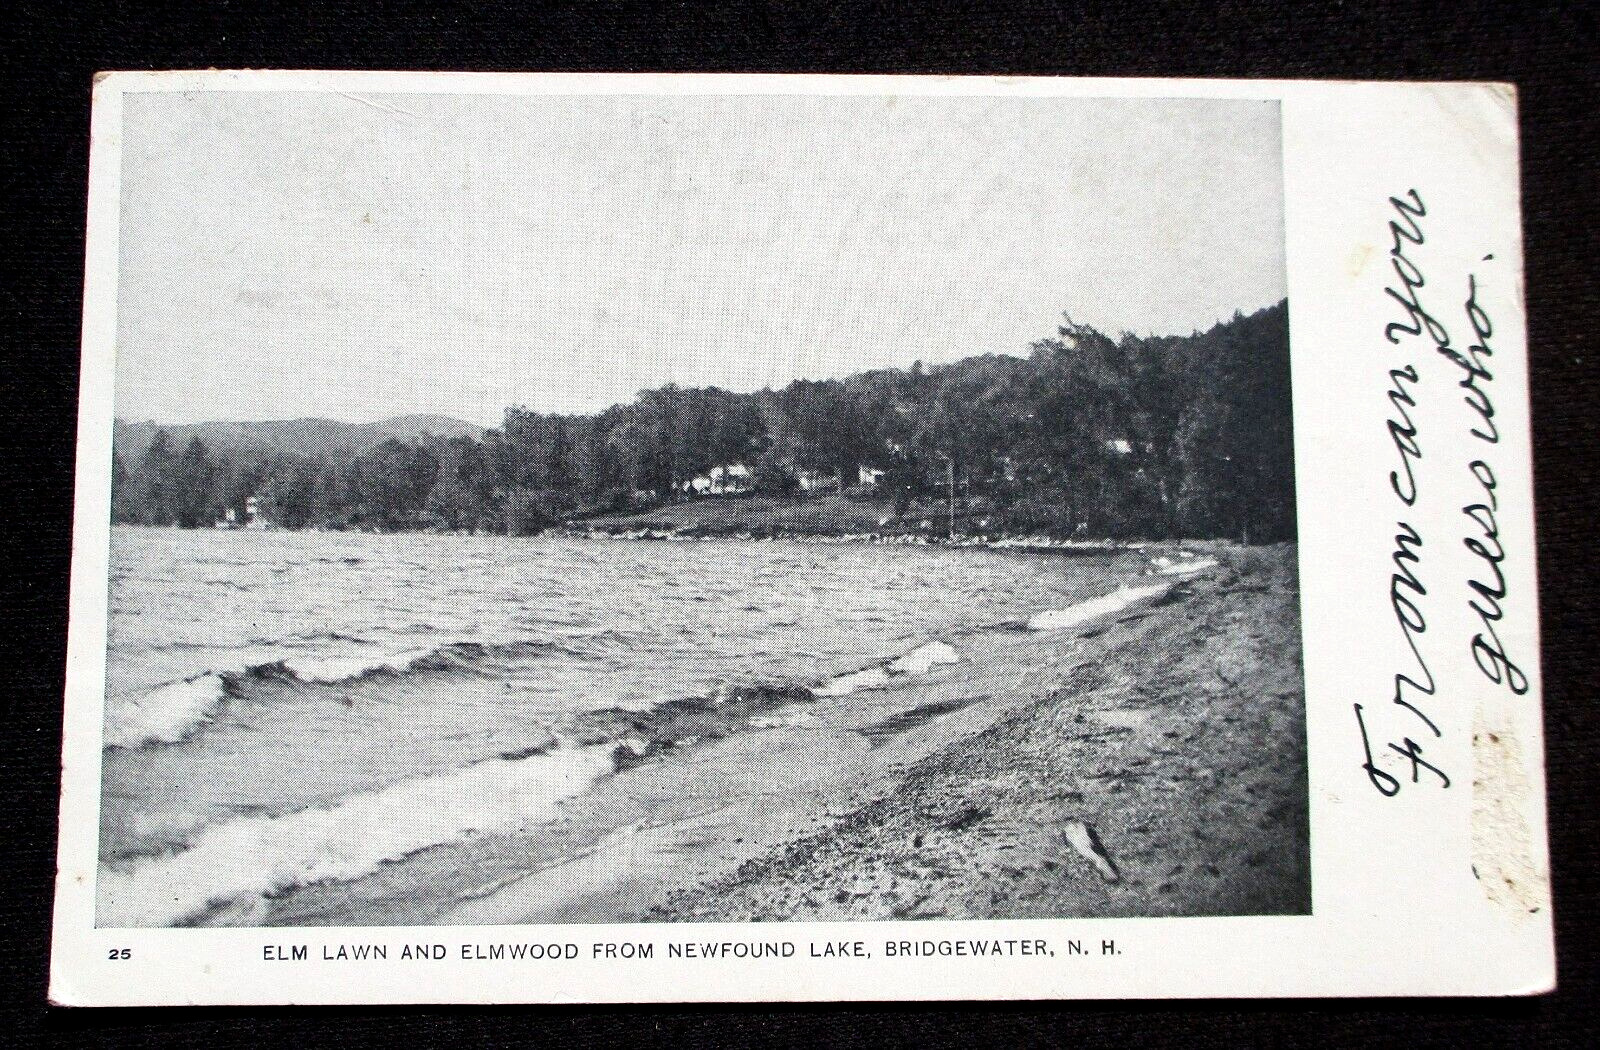 VINTAGE 1906 POSTCARD - ELM LAWN FROM NEWFOUND LAKE, BRIDGEWATER, NEW HEMPSHIRE